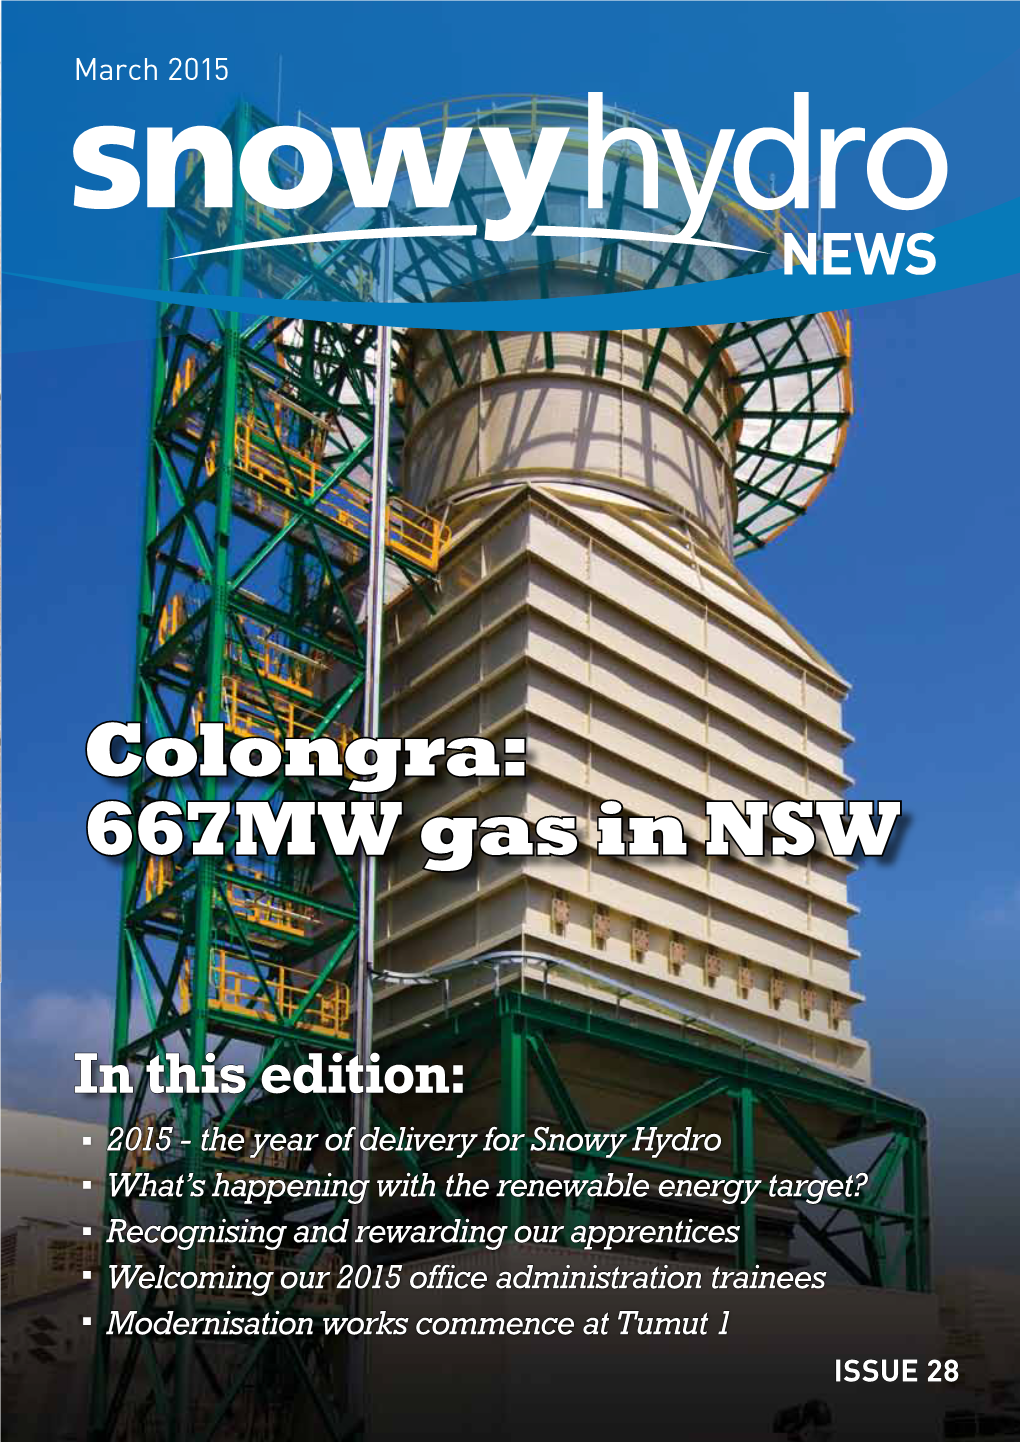 Colongra: 667MW Gas in NSW